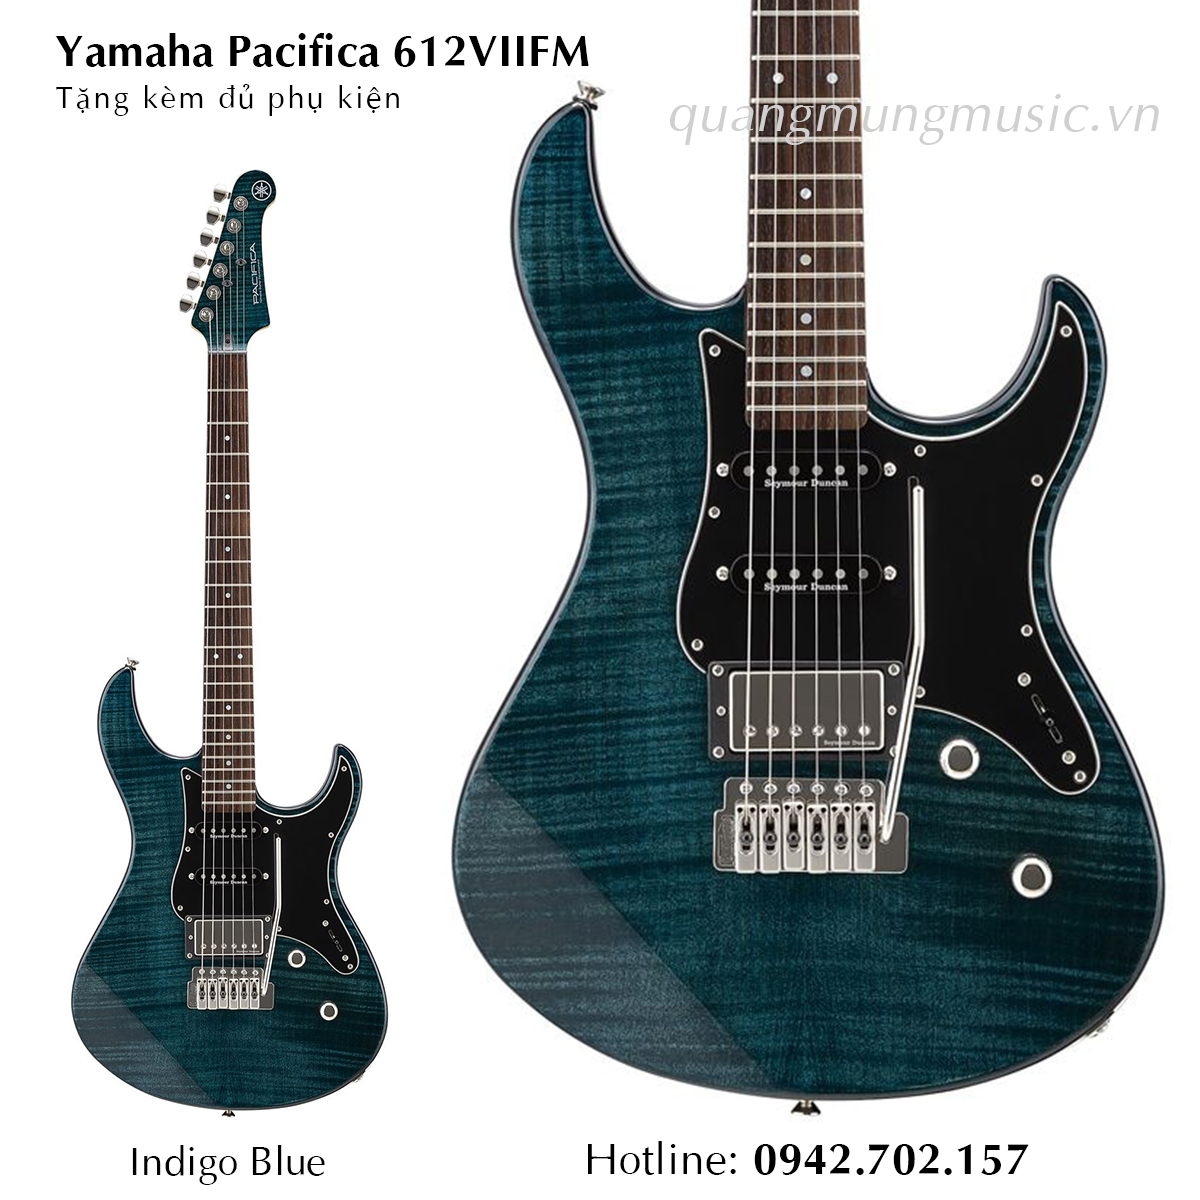 Yamaha Pacifica 612VIIFM-Indigo Blue